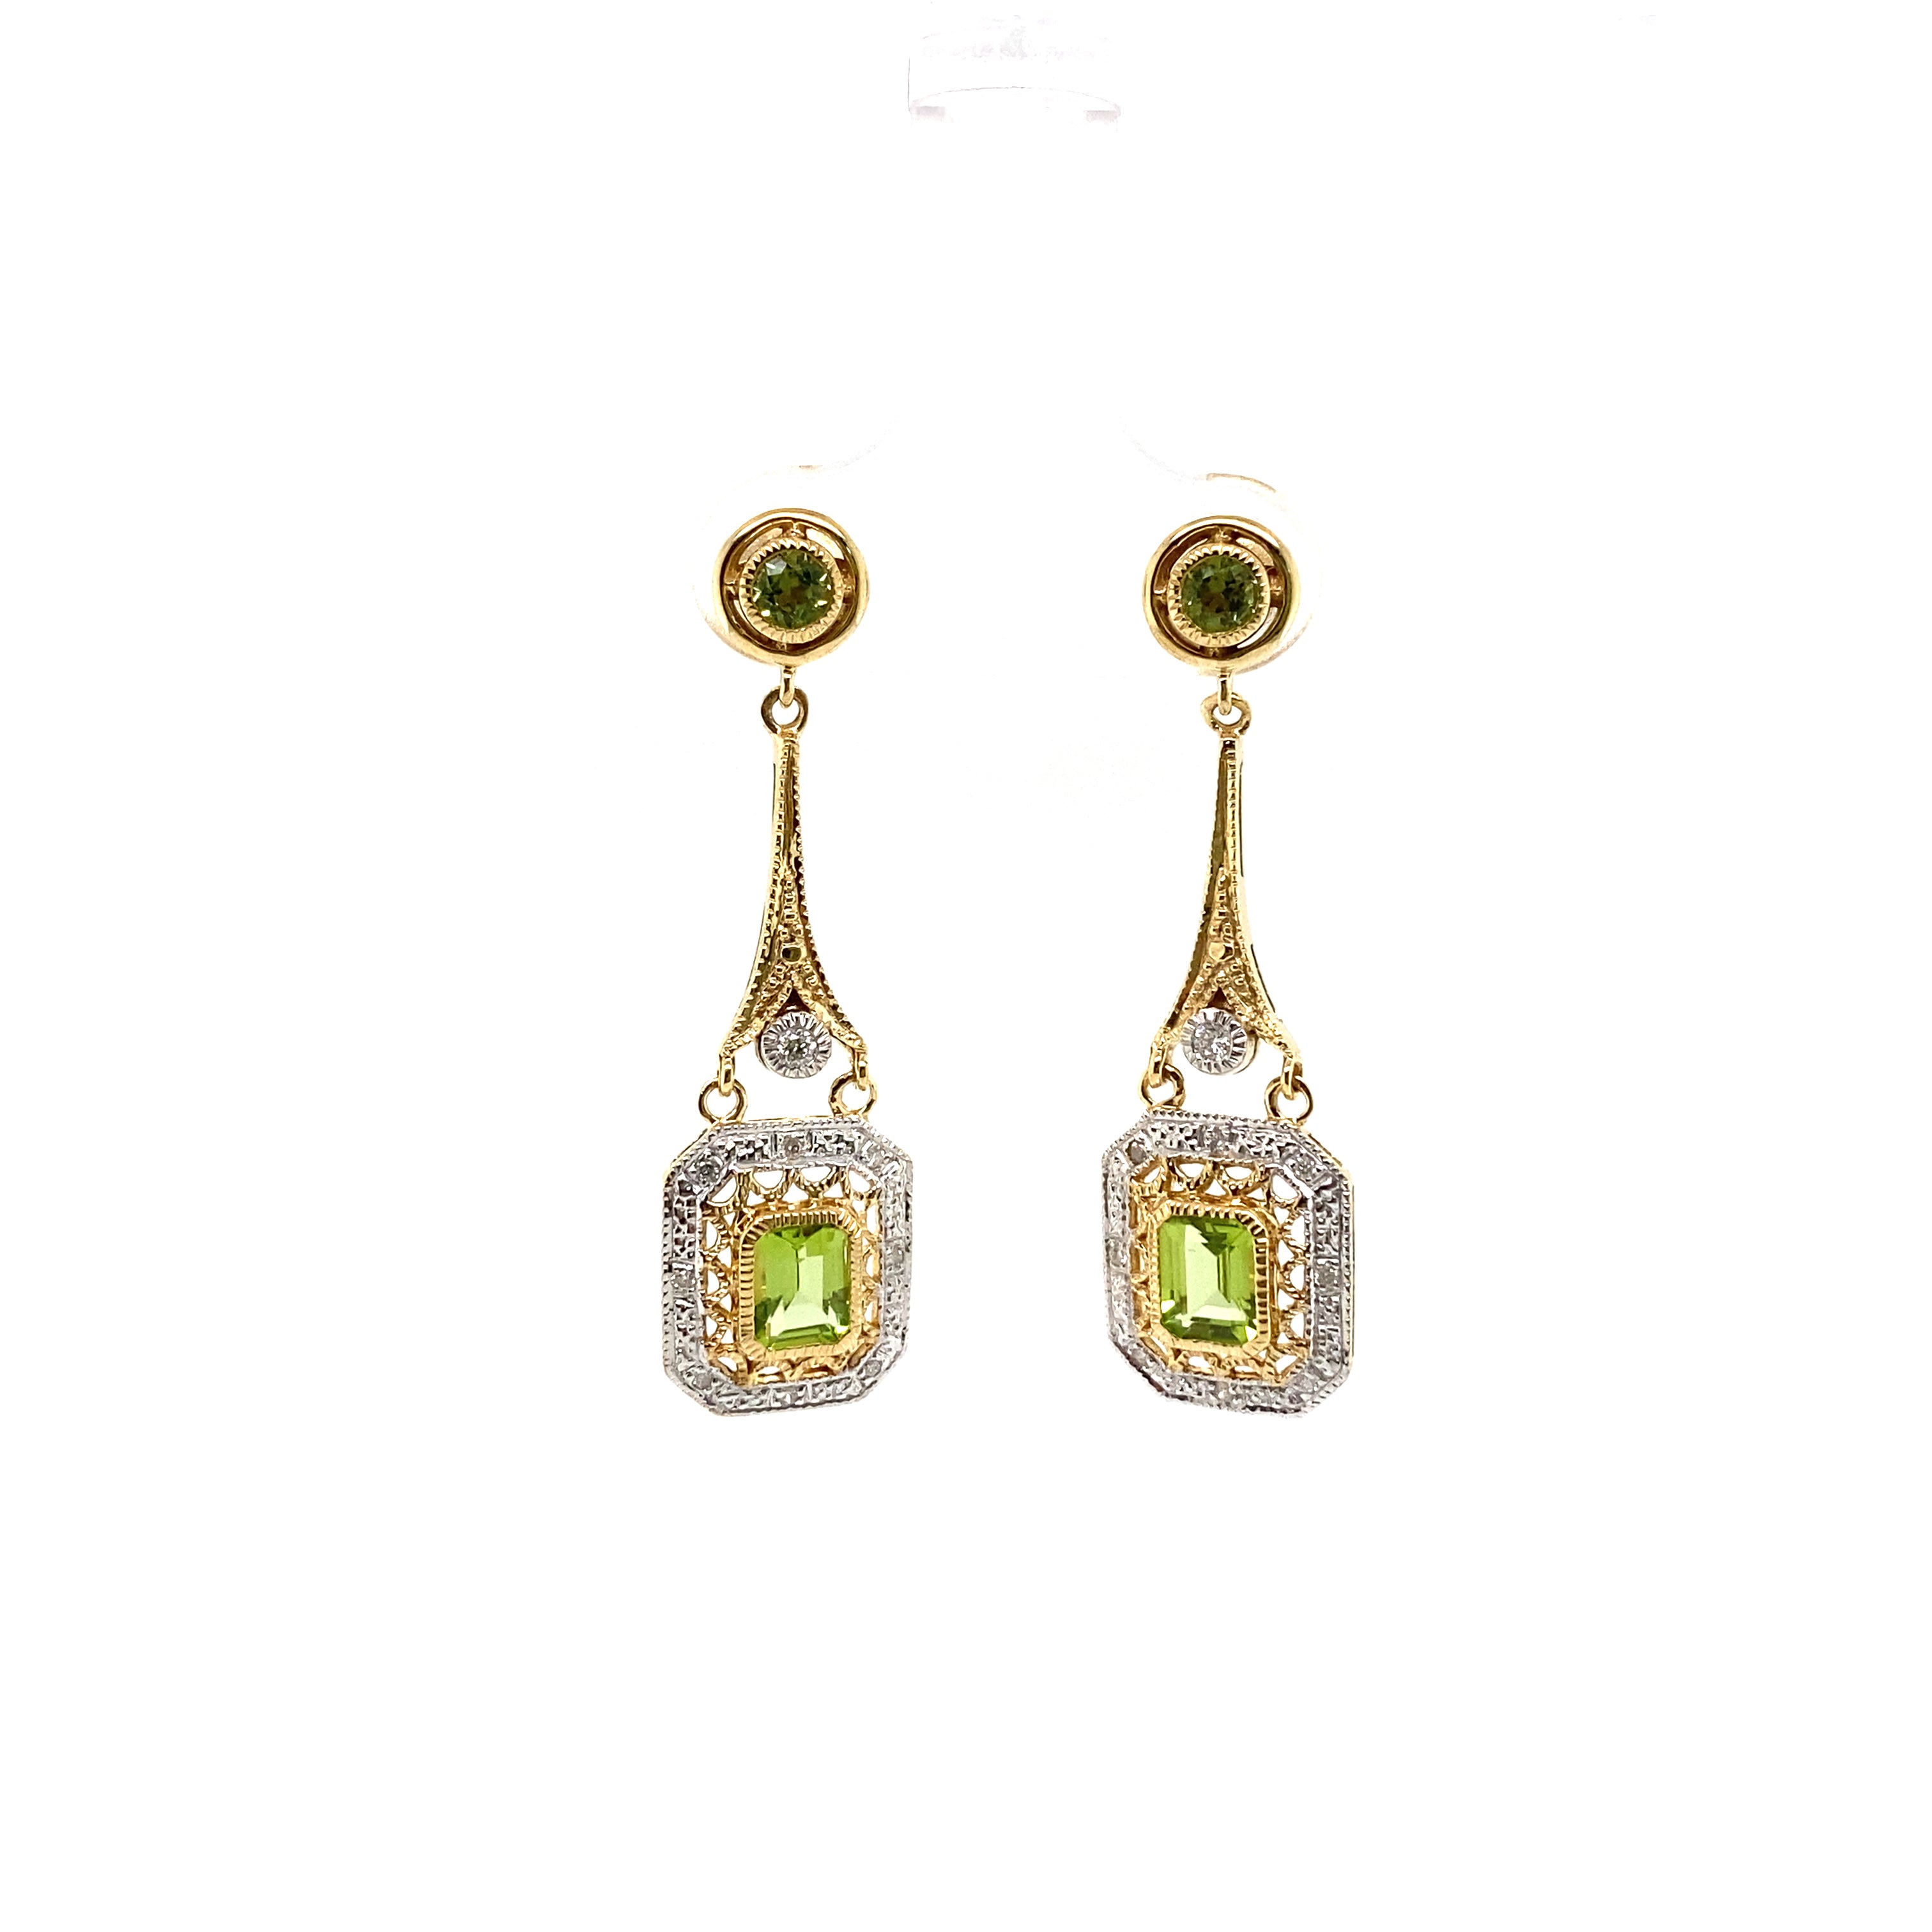 9ct yellow gold peridot and diamond earrings.